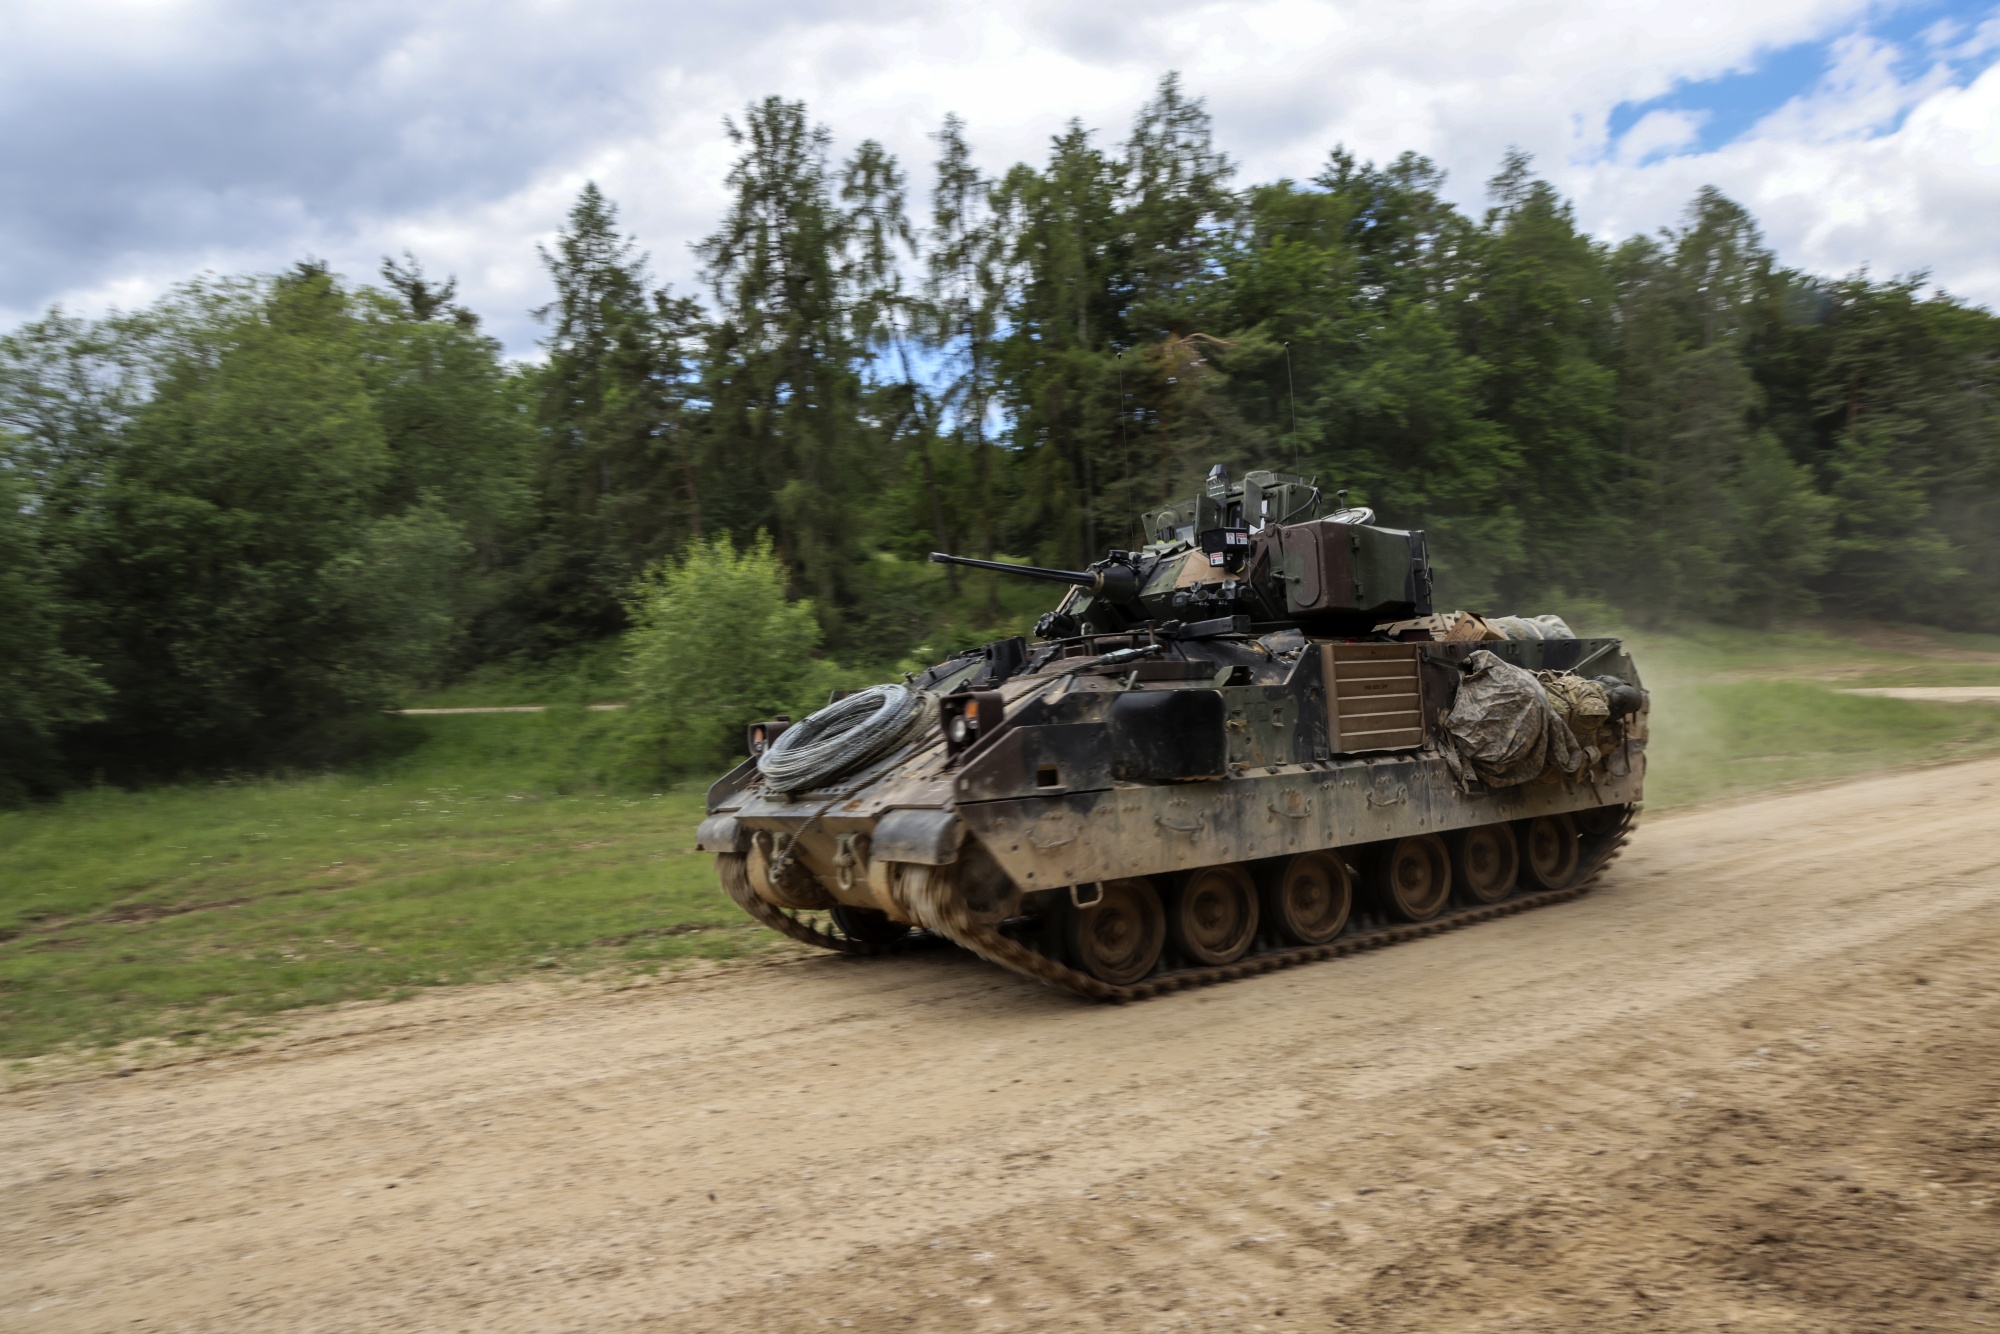 US Weighs Sending Bradley Fighting Vehicles to Bolster Ukraine Military -  Bloomberg